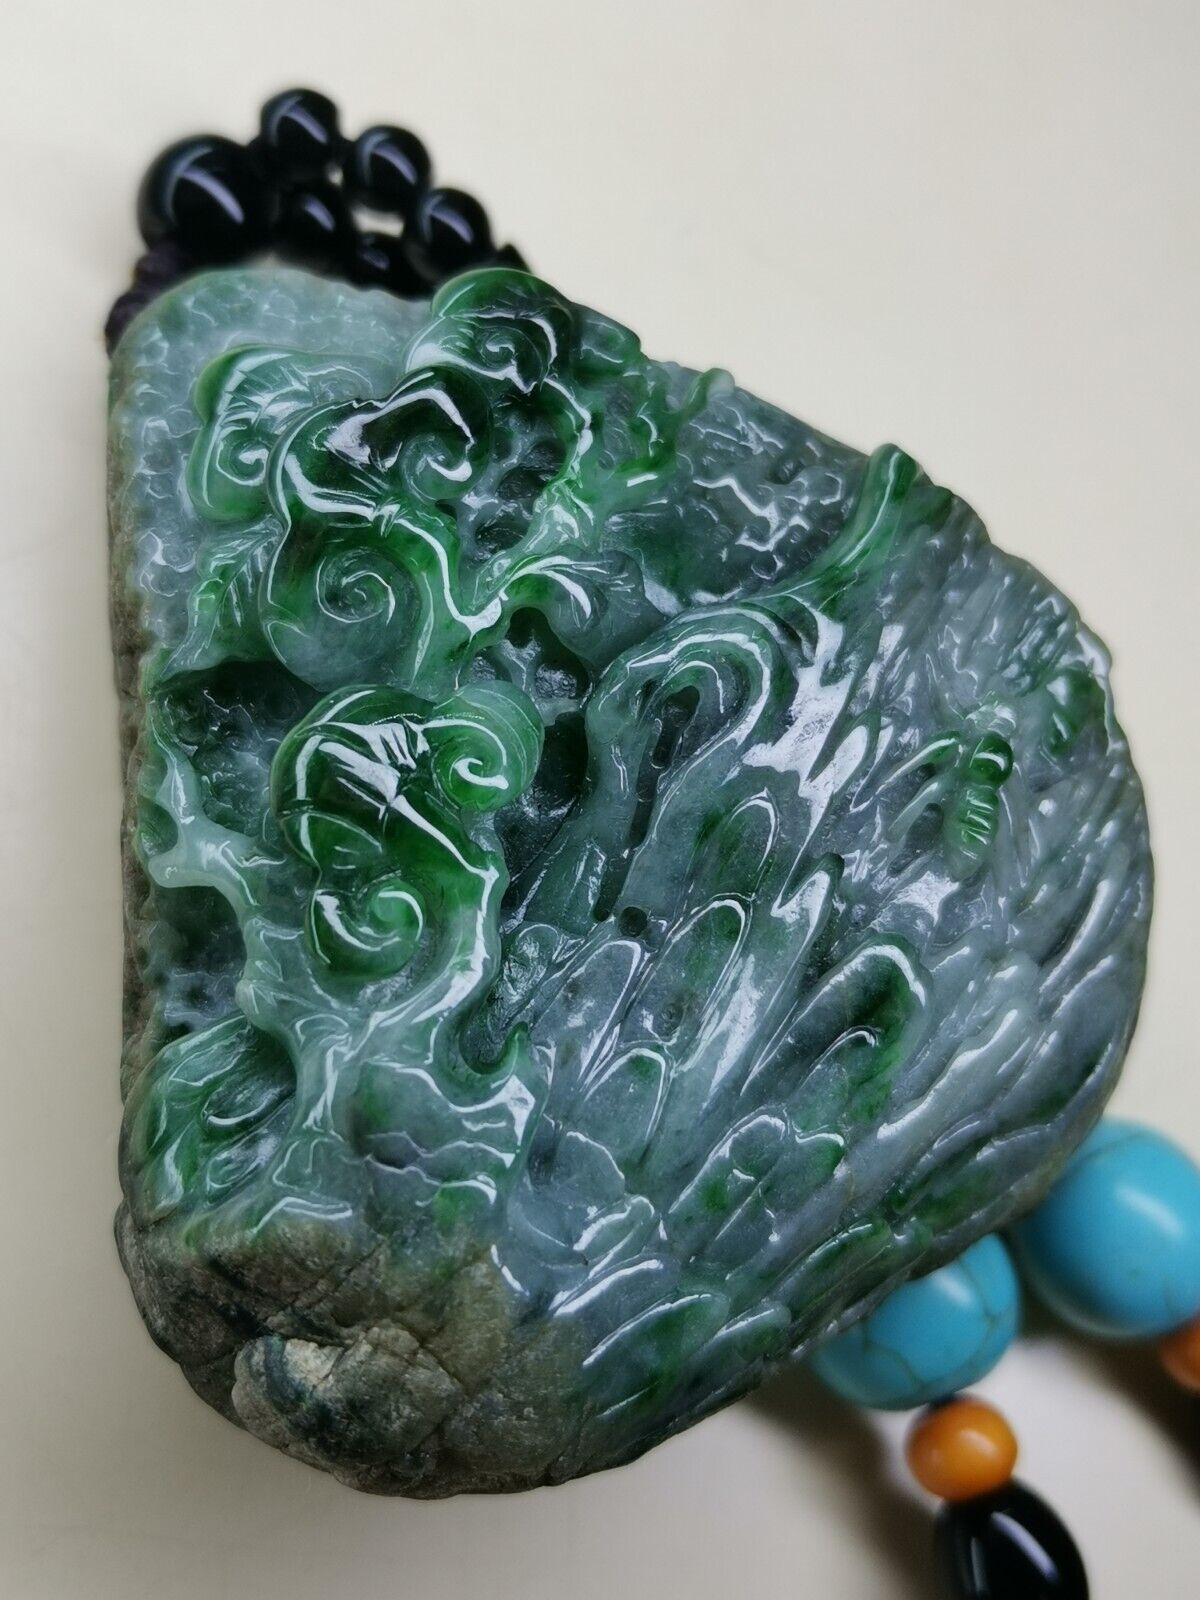 Icy Ice Green 100% Natural Burma Jadeite Jade Hand Piece # 130 g # 652 carat #